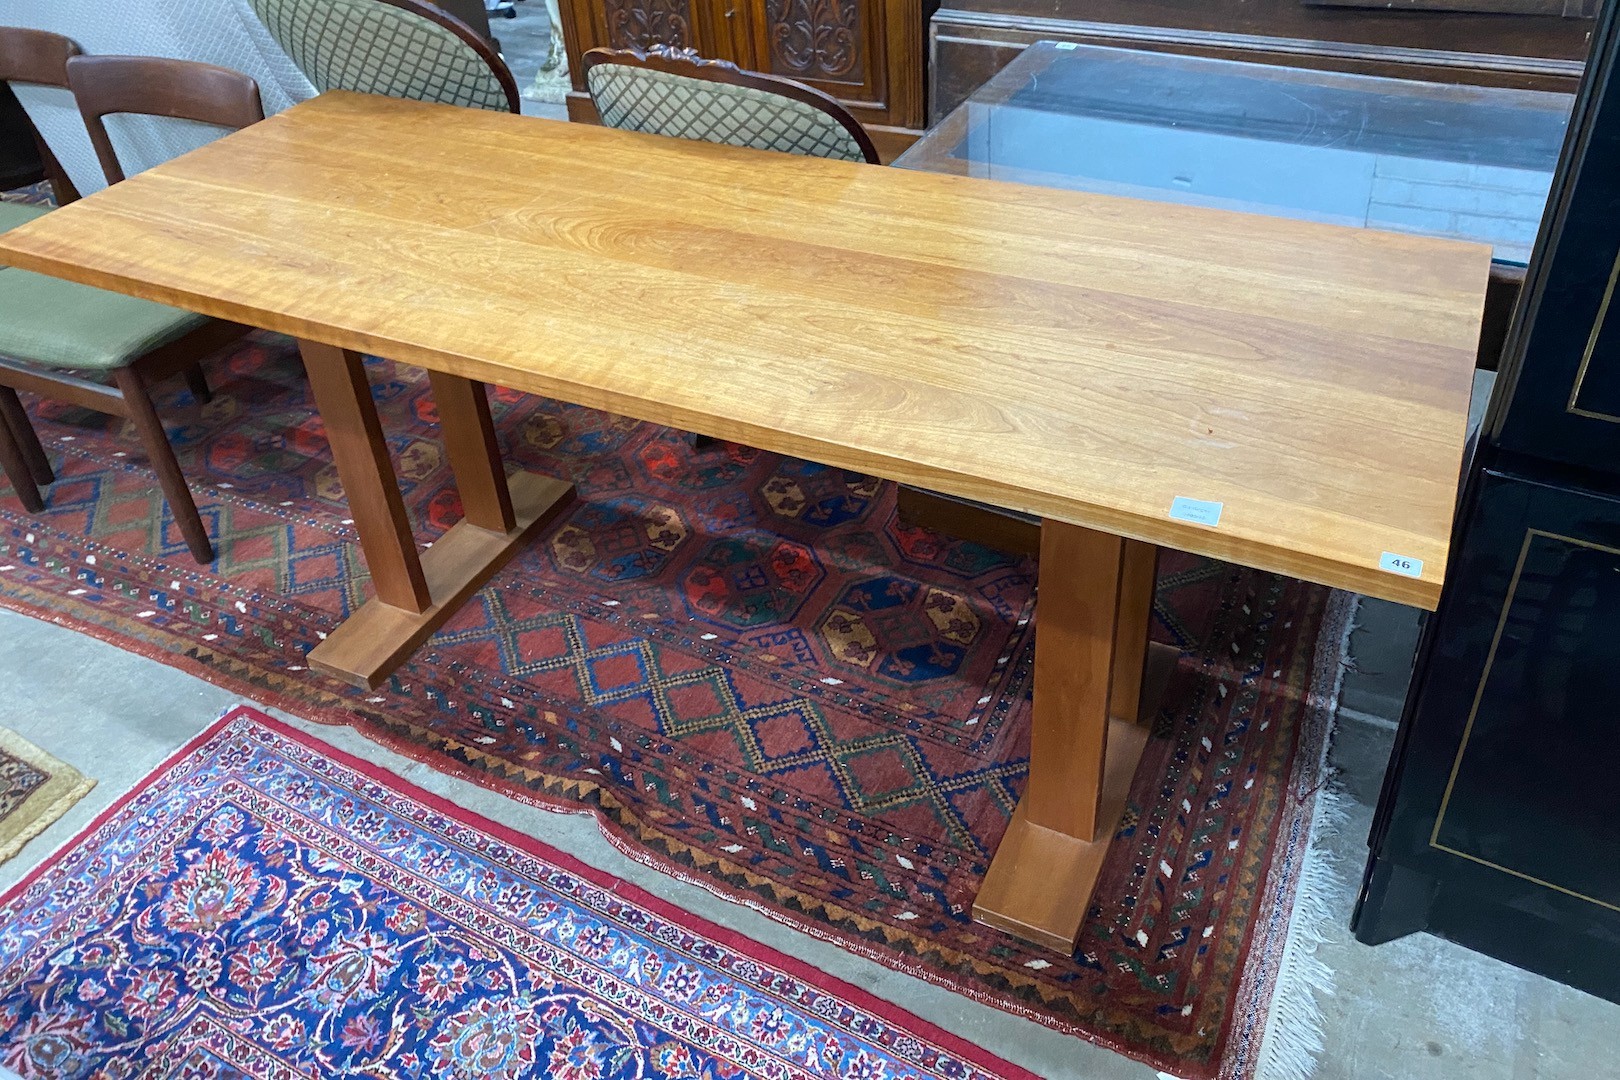 A bespoke rectangular cherrywood refectory table width 183cm, depth 66cm, height 74cm.